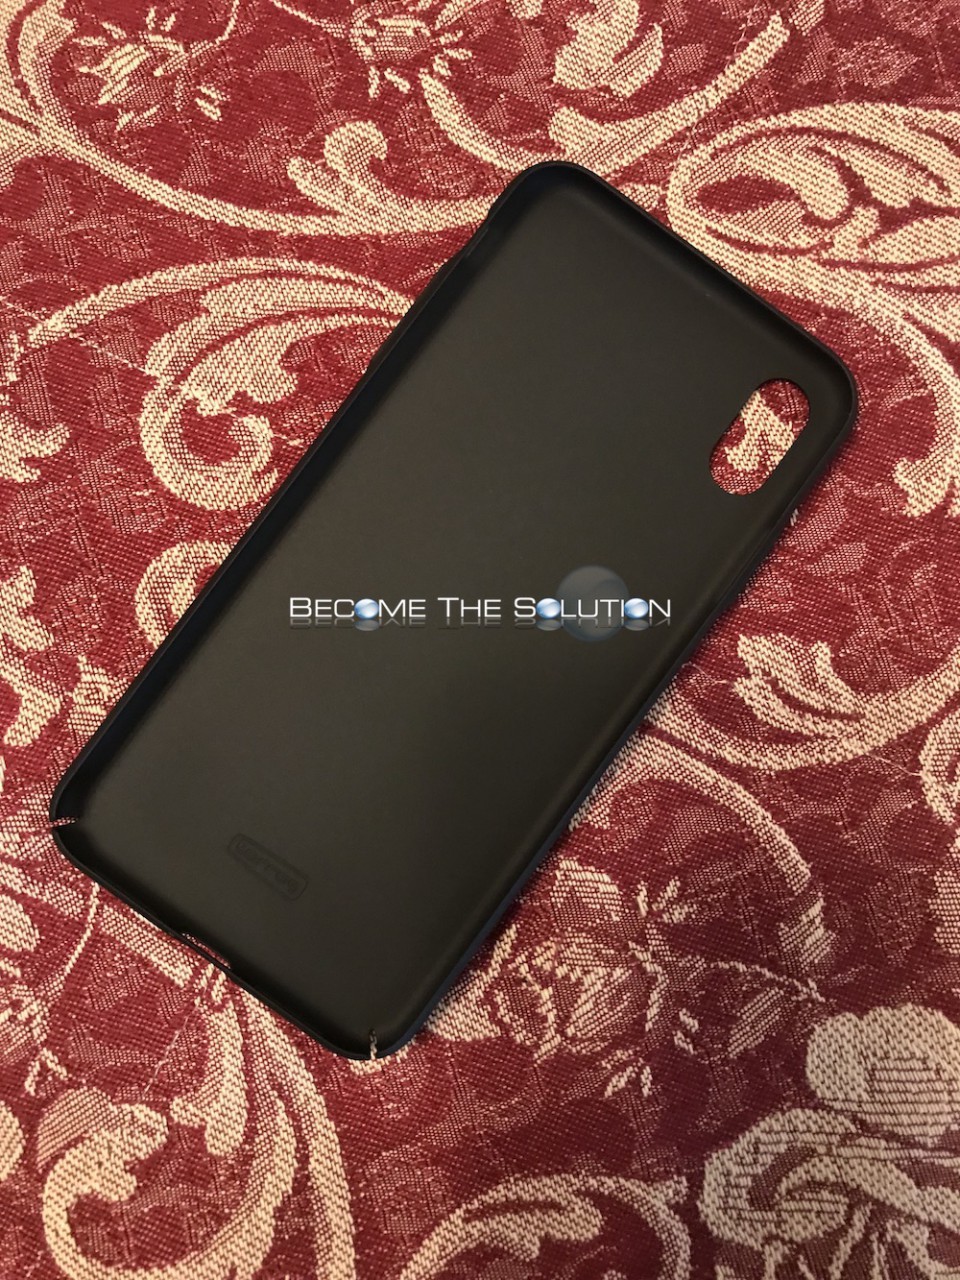 Iphone xs max best case cover ultra slim torras case inside